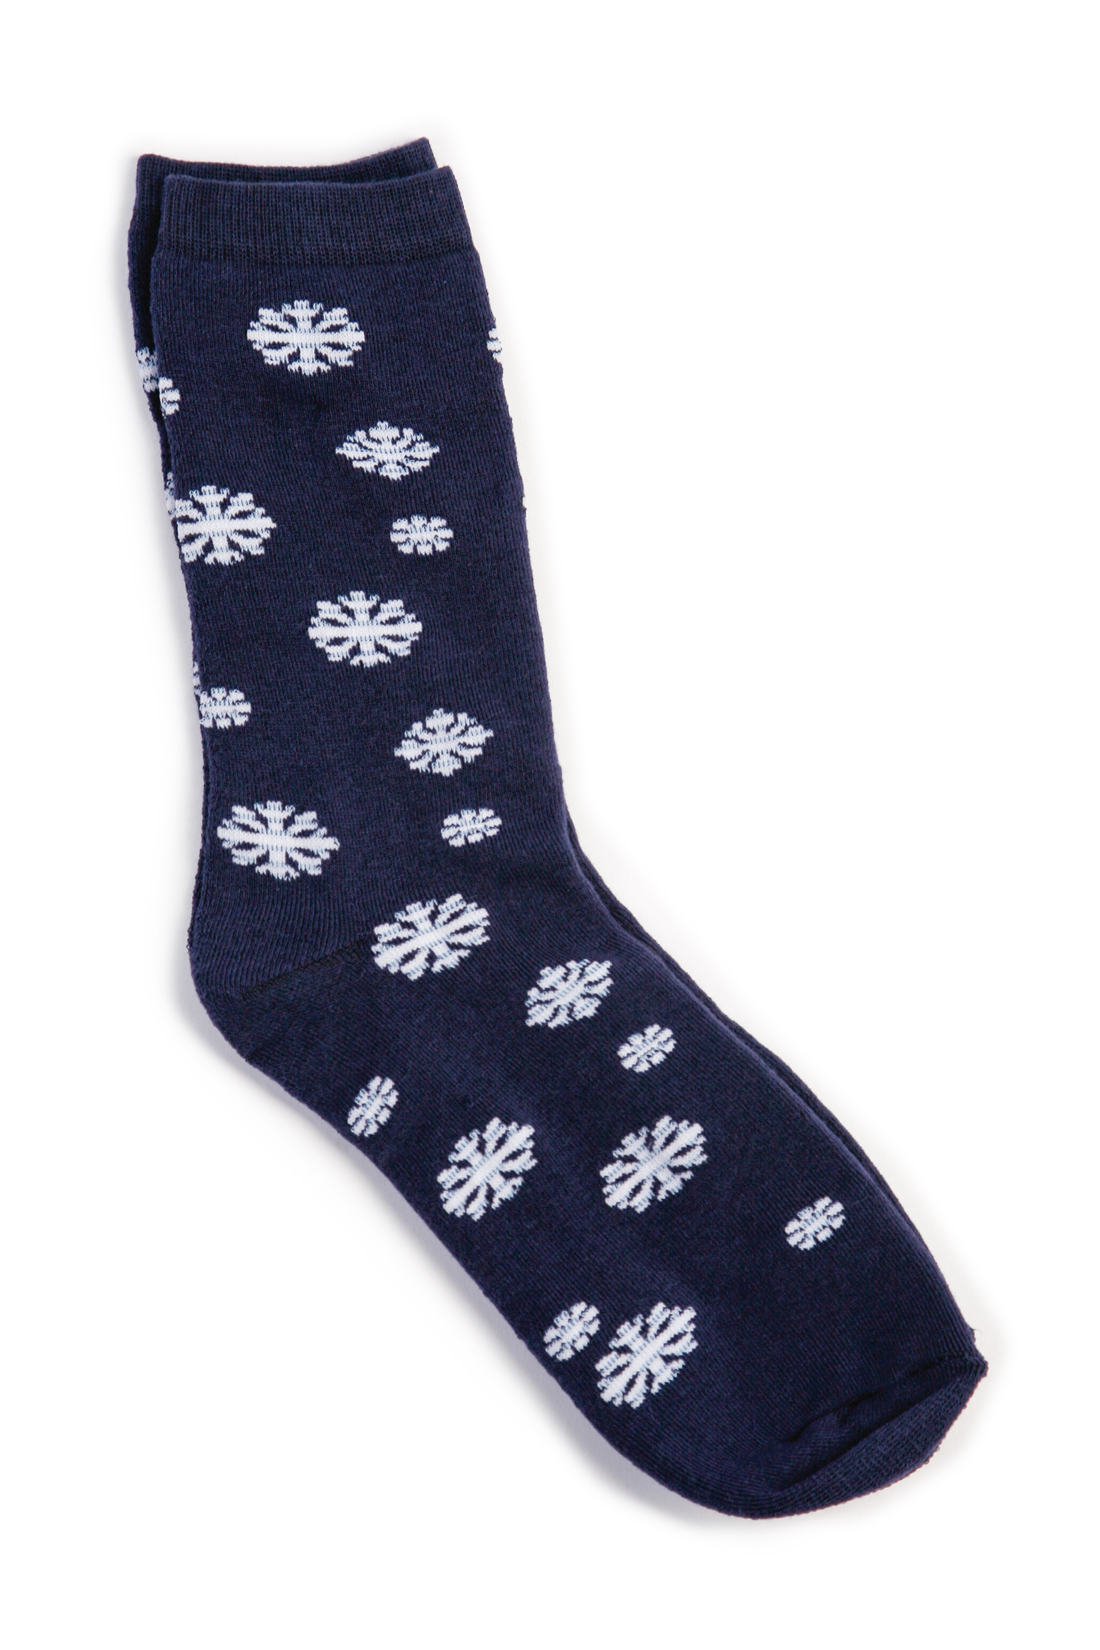 Носки со снежинками (арт. baon B398513), размер 35/37, цвет синий